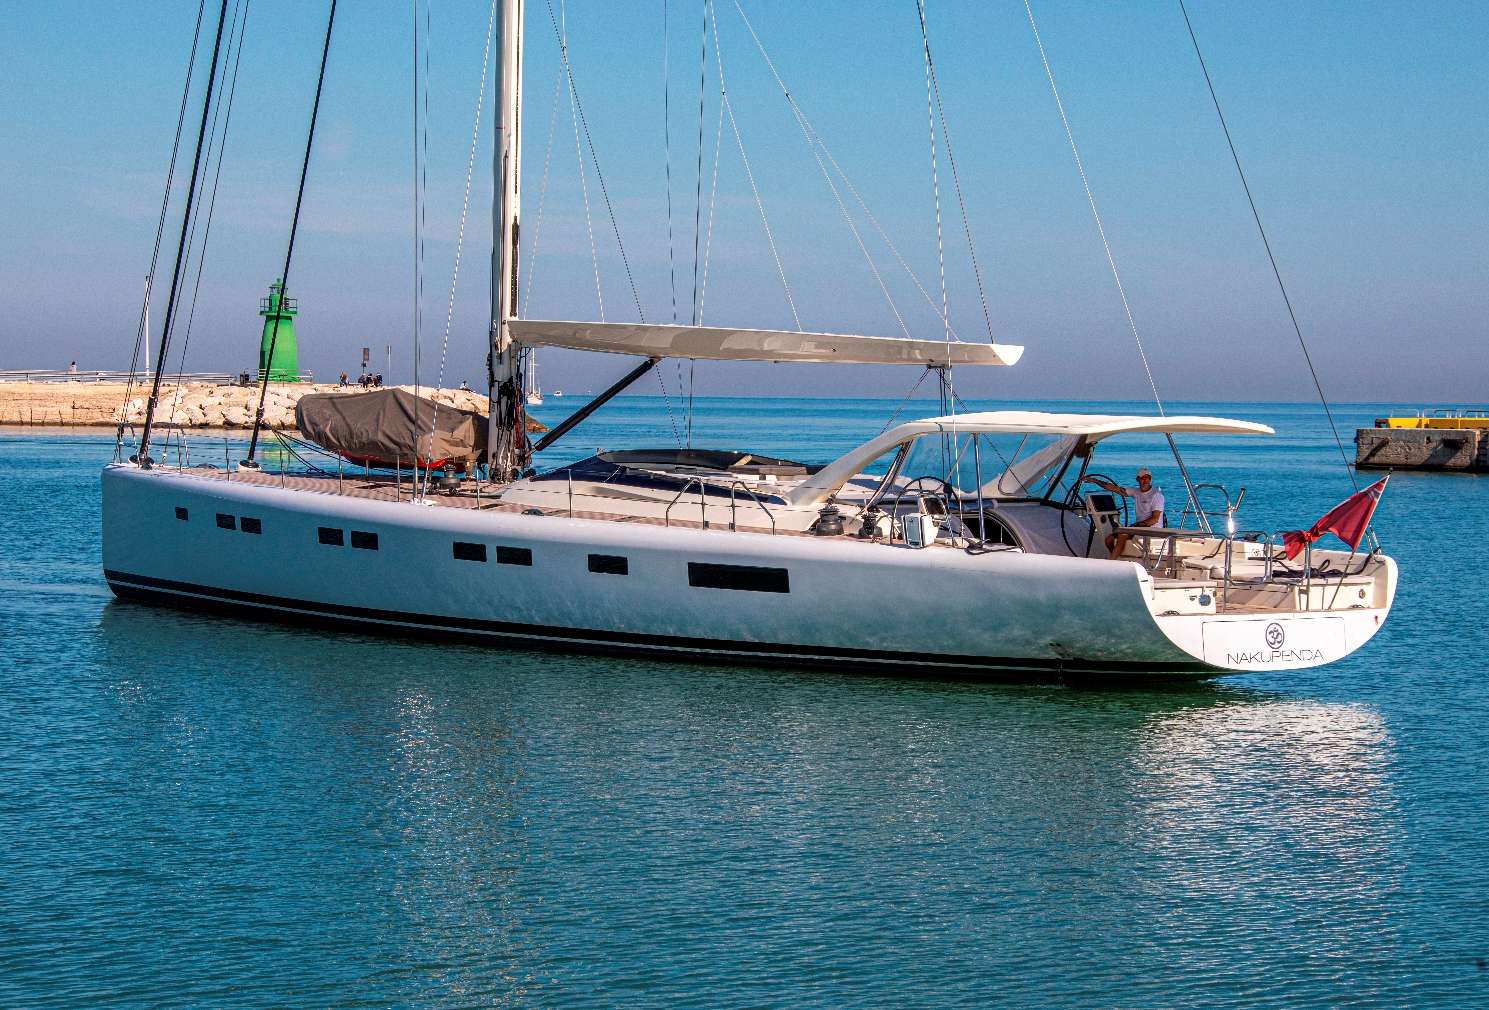 nakupenda - Yacht Charter Sorrento & Boat hire in Fr. Riviera & Tyrrhenian Sea 1